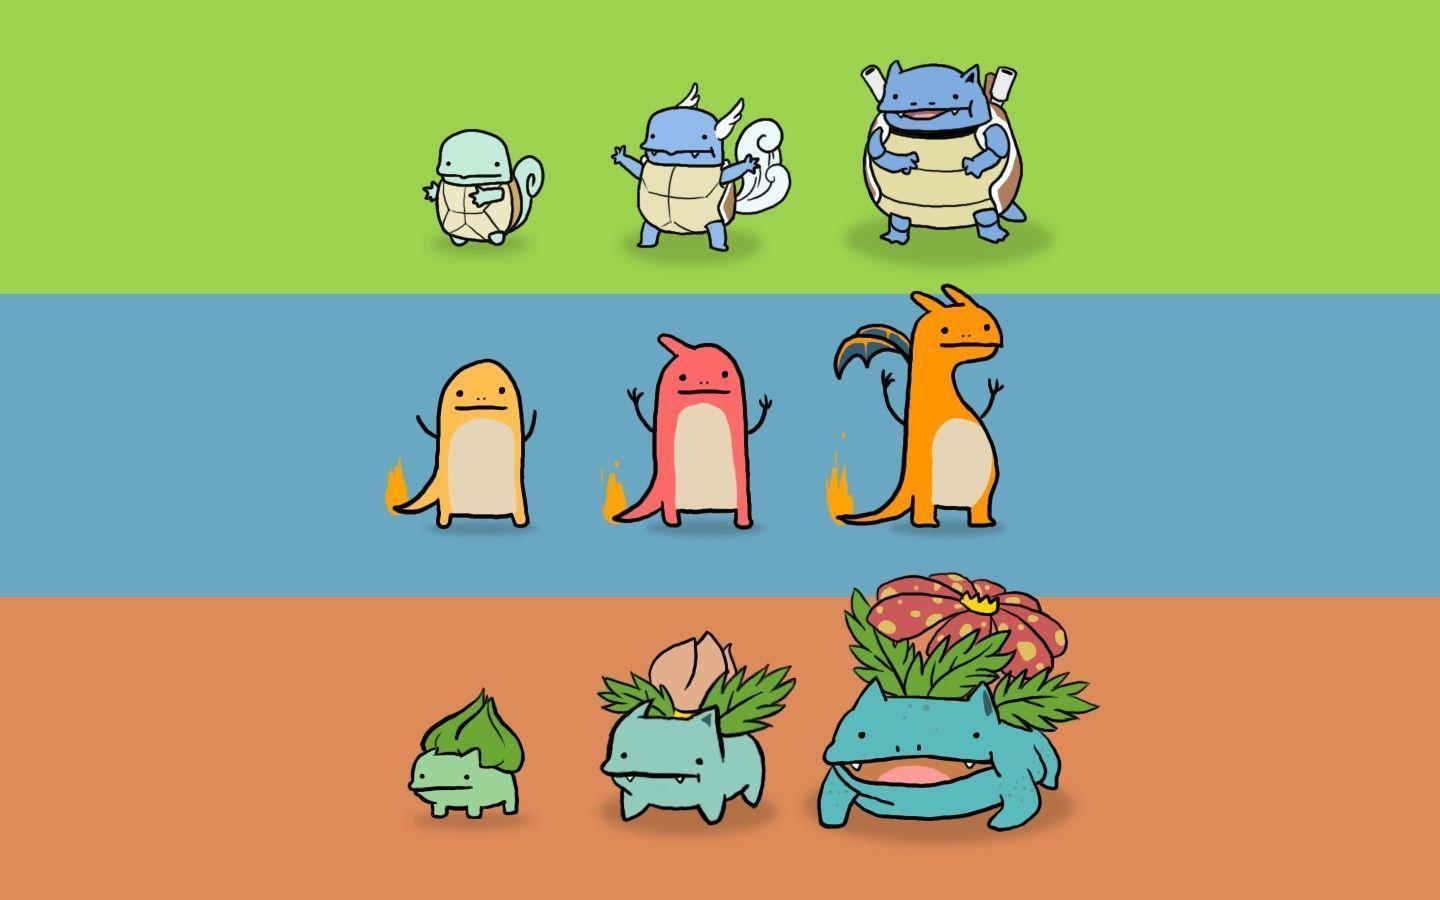 Best Pokemon Wallpaper. David Crew&;s Blog